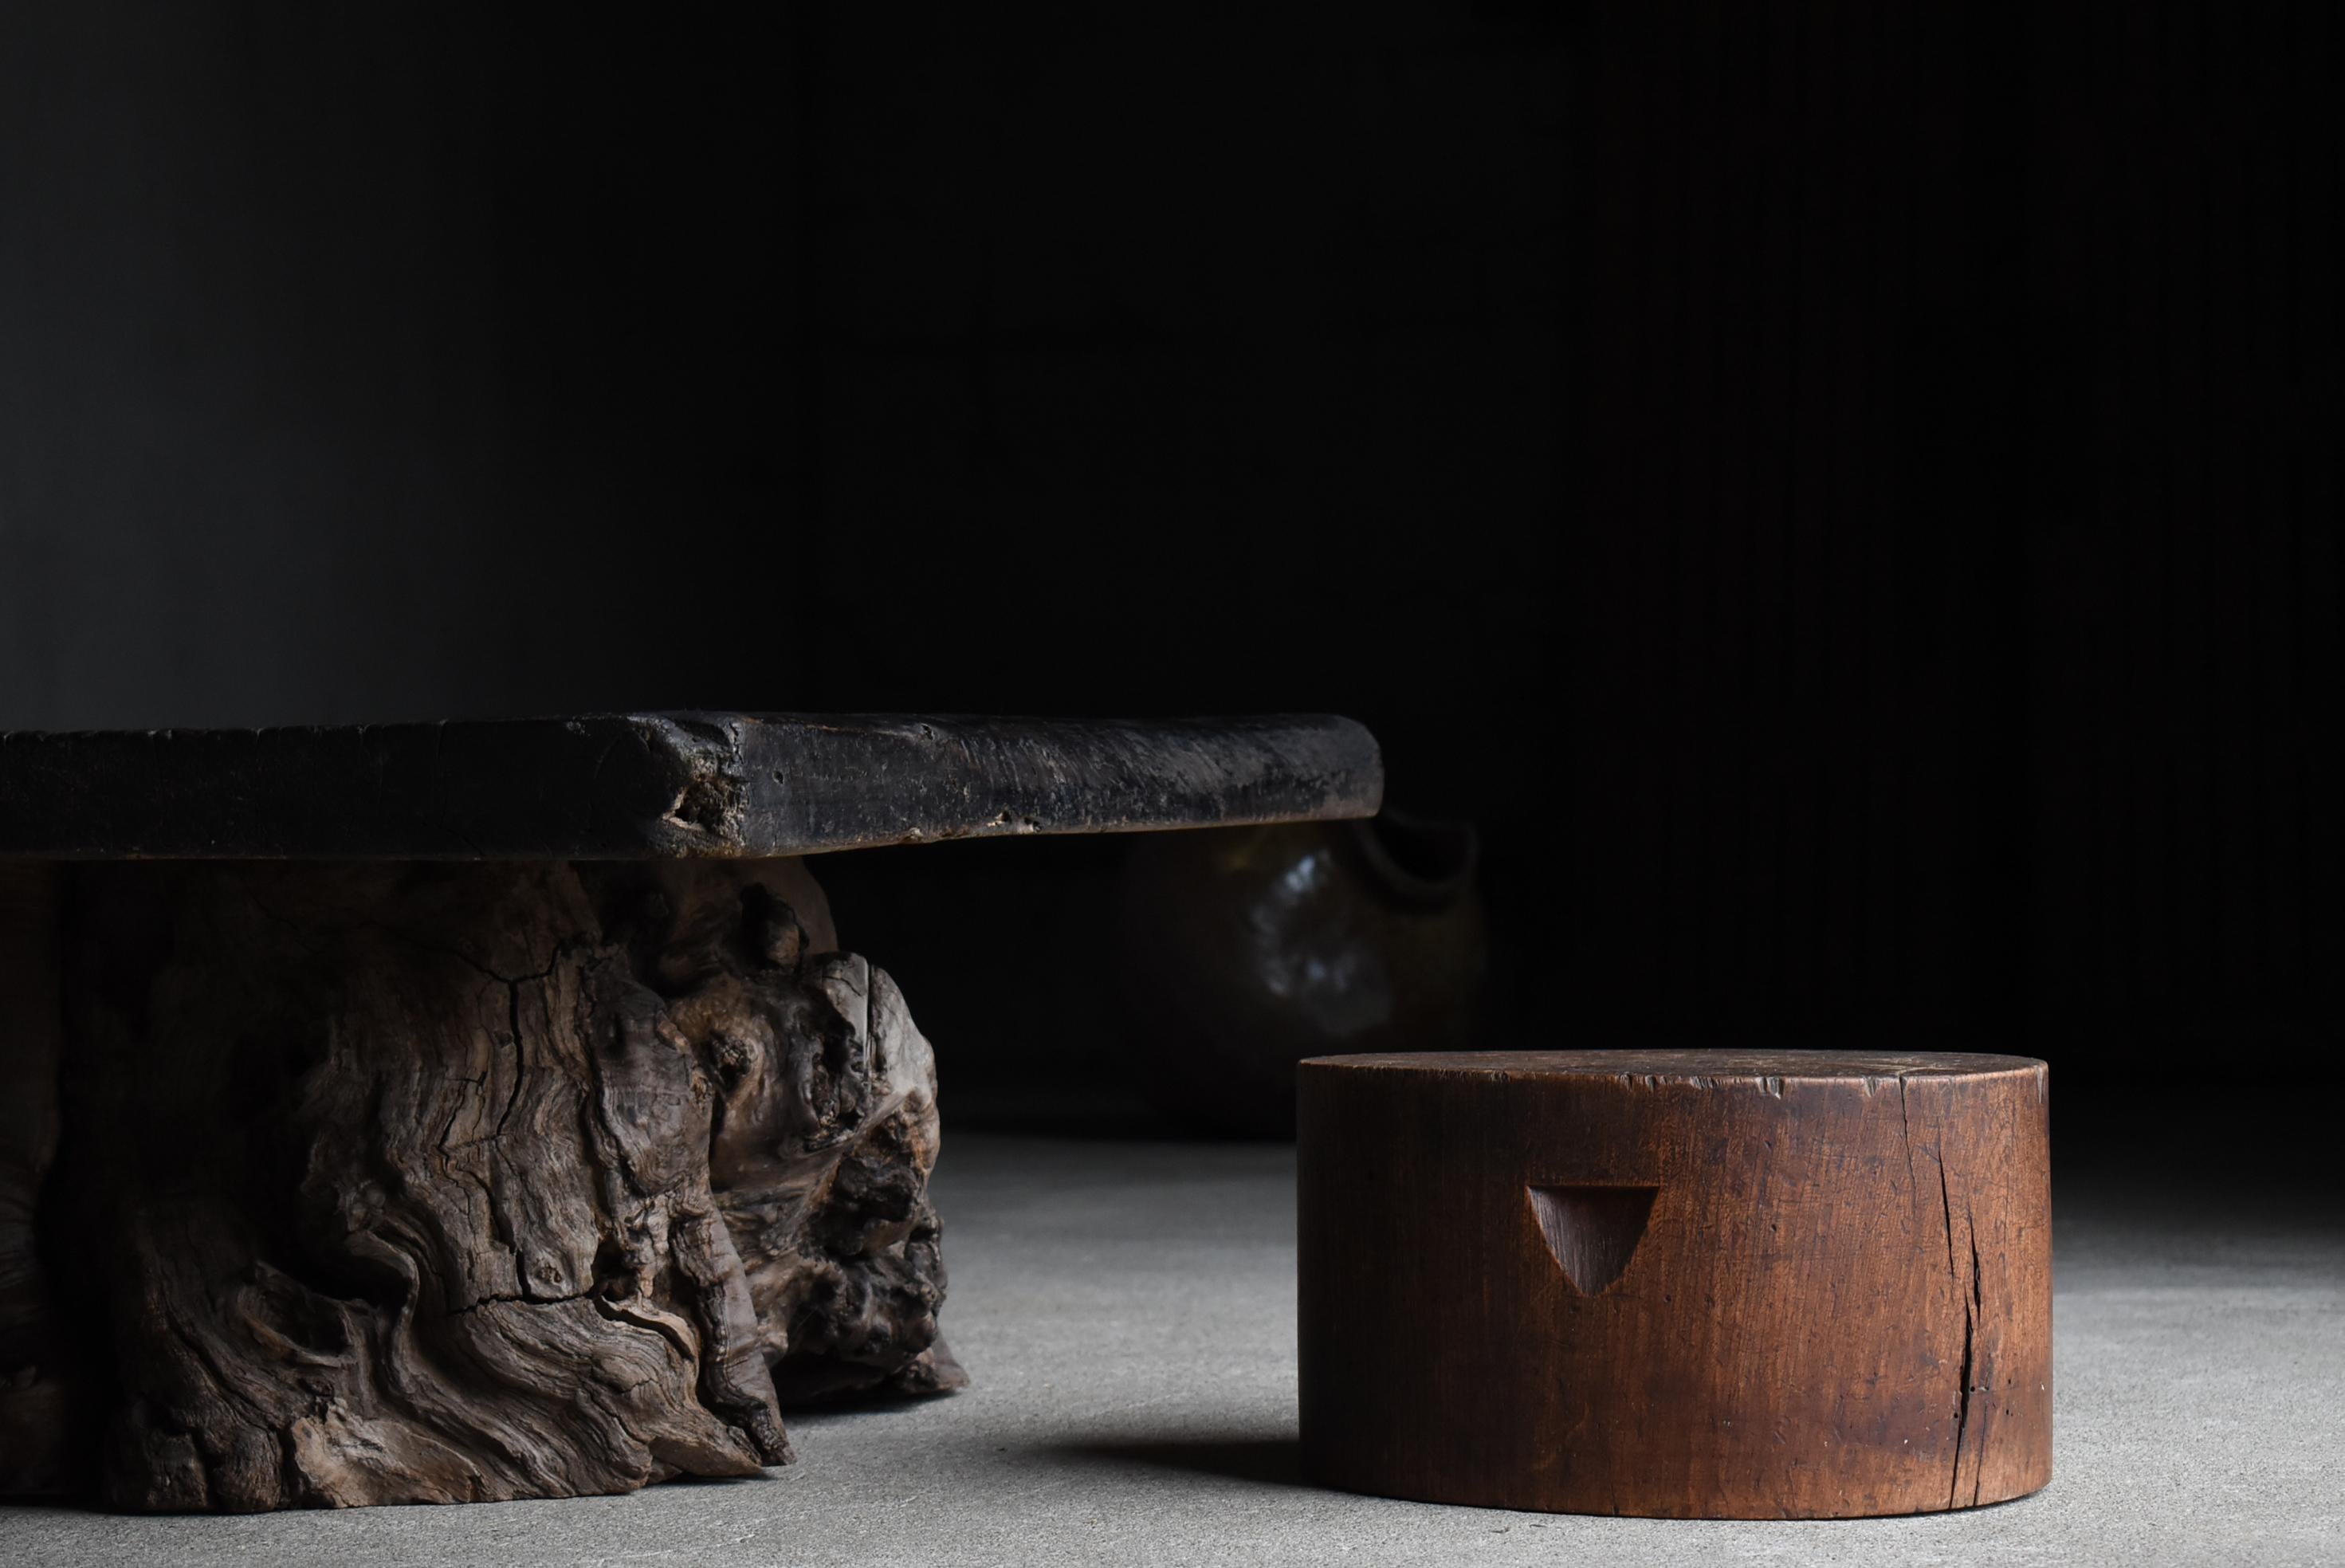 Meiji Japanese Antique Wooden Block Stool 1860s-1900s / Primitive Wabi Sabi Wood Chair